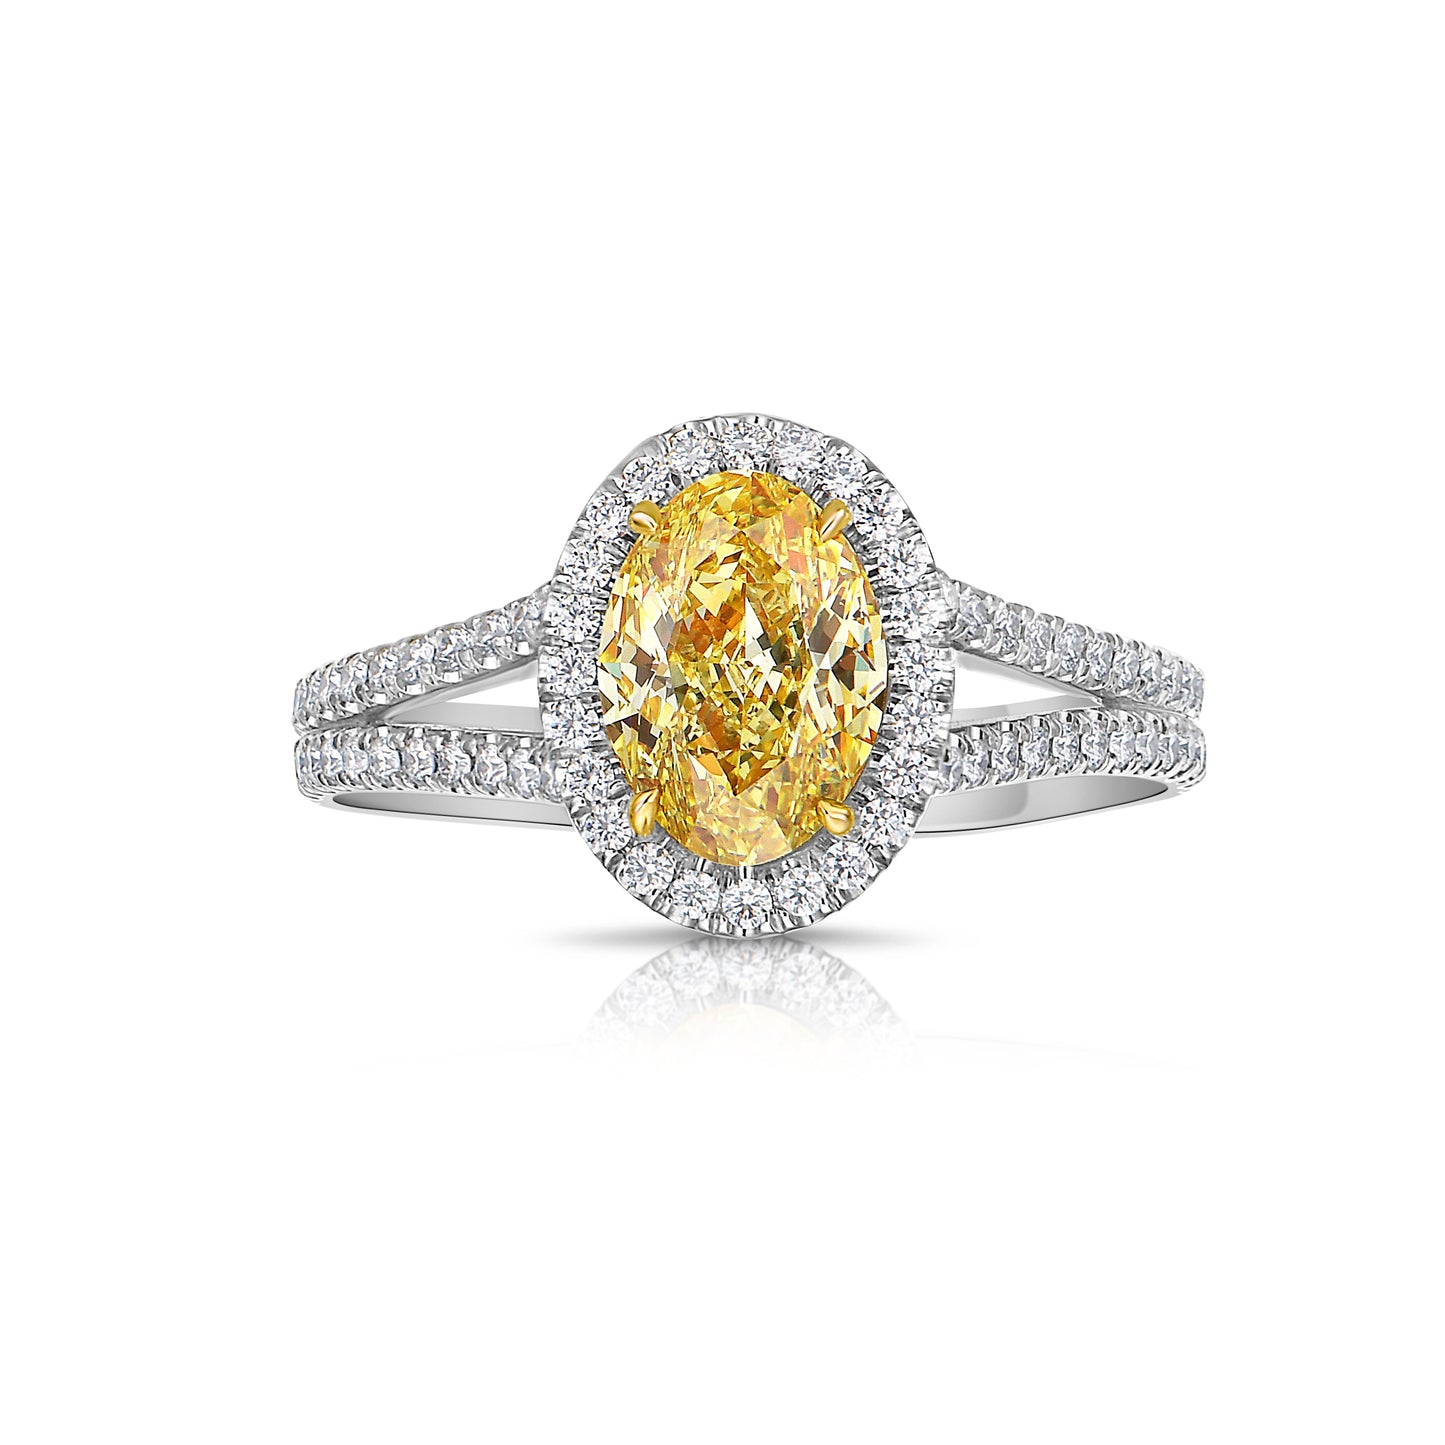 Fancy intense yellow oval diamond ring